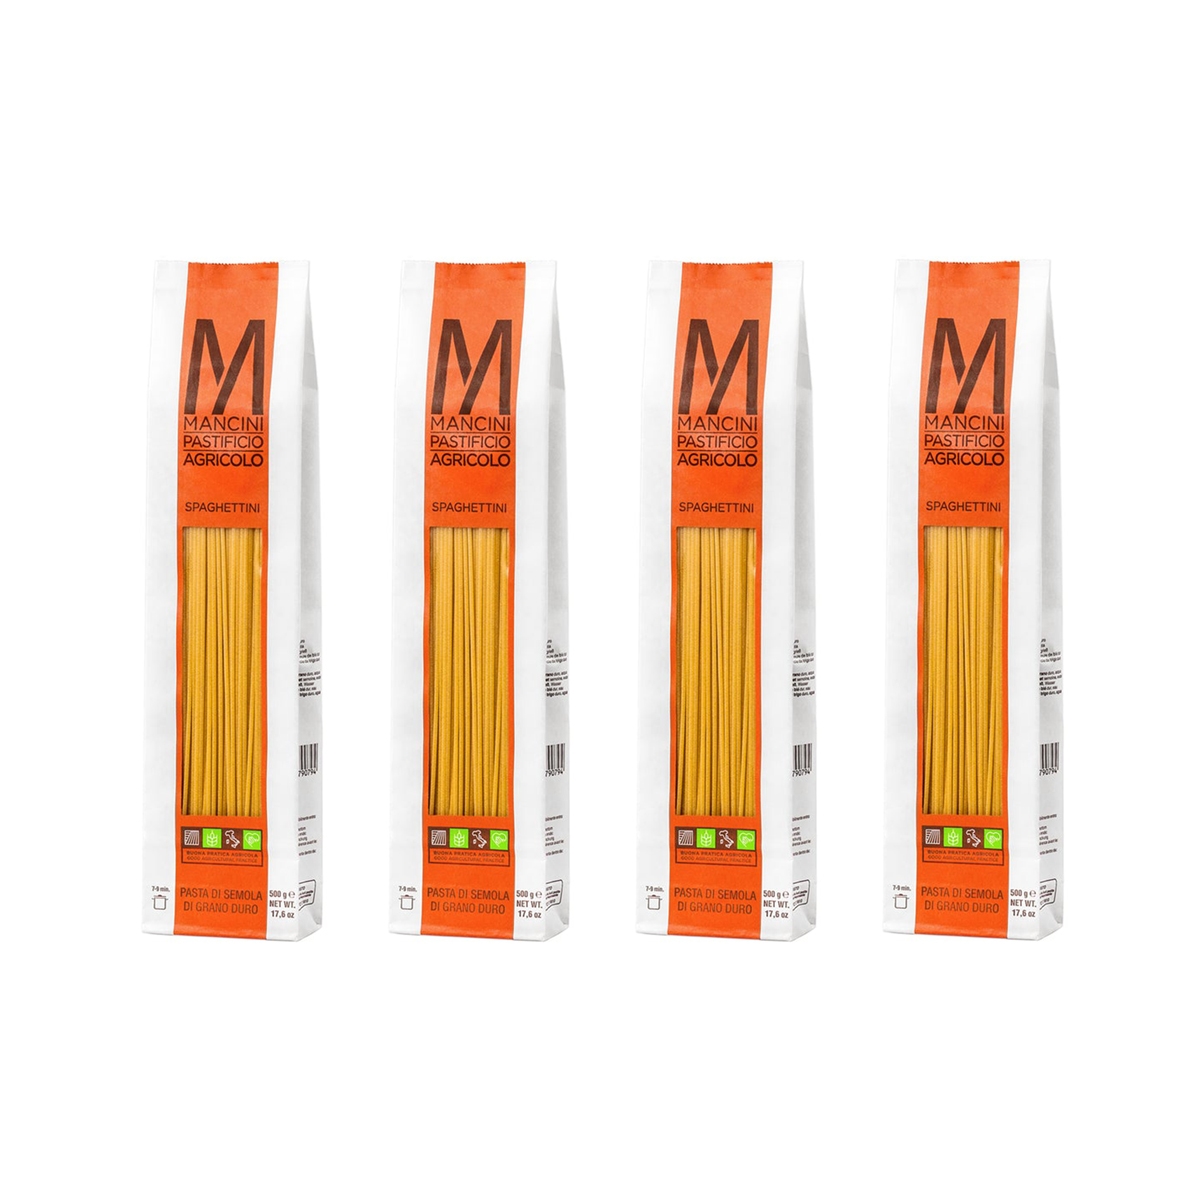 classic line - spaghettini - 4 packs of 500 g